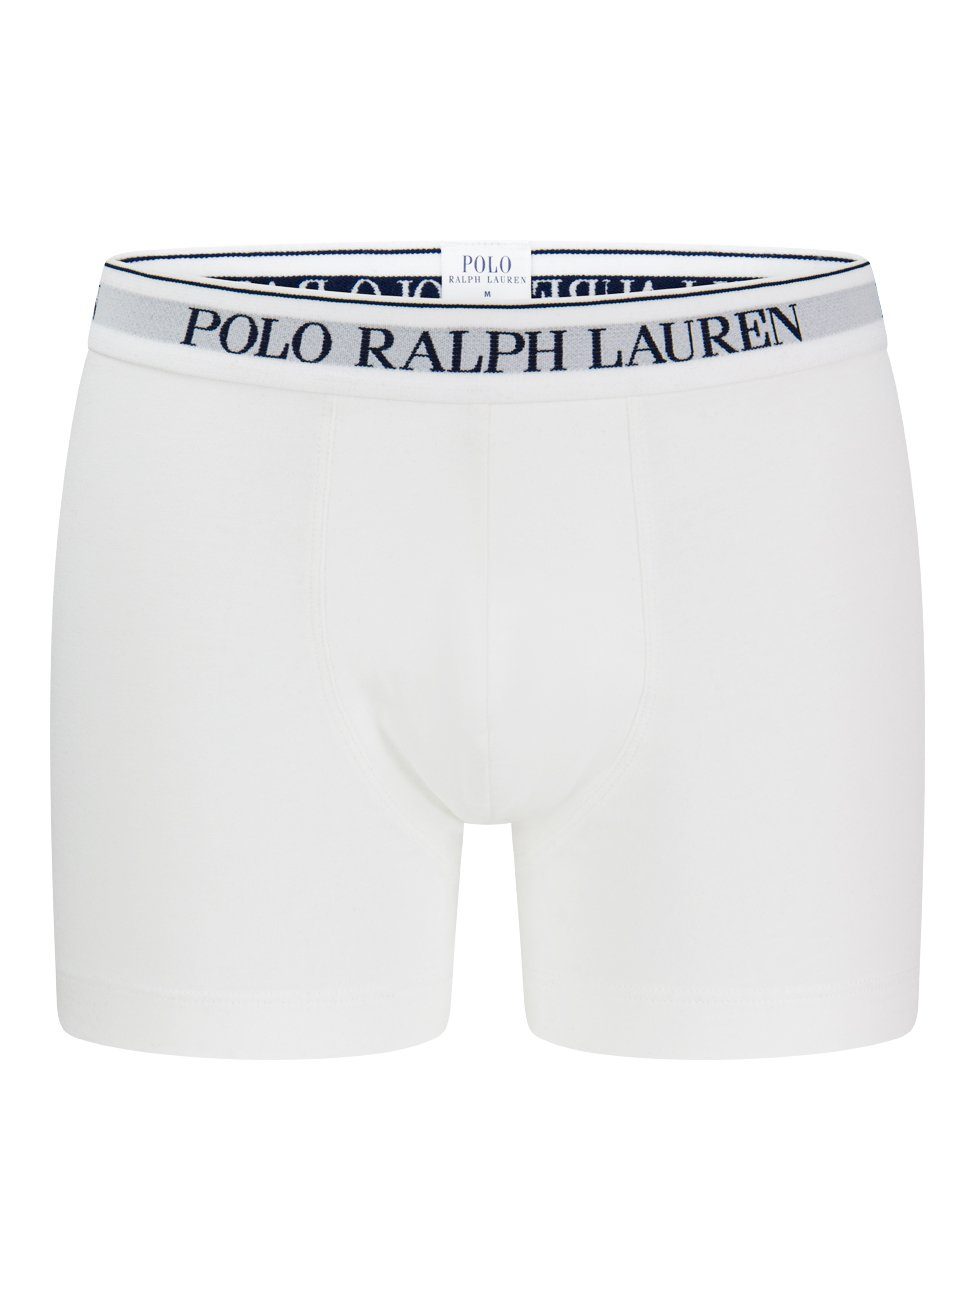 Polo Logo TRUNK mit Ralph Lauren Pack 001 Webbund CLASSIC (3-St) 3er 3PK WHITE/WHITE/WHITE Boxershorts